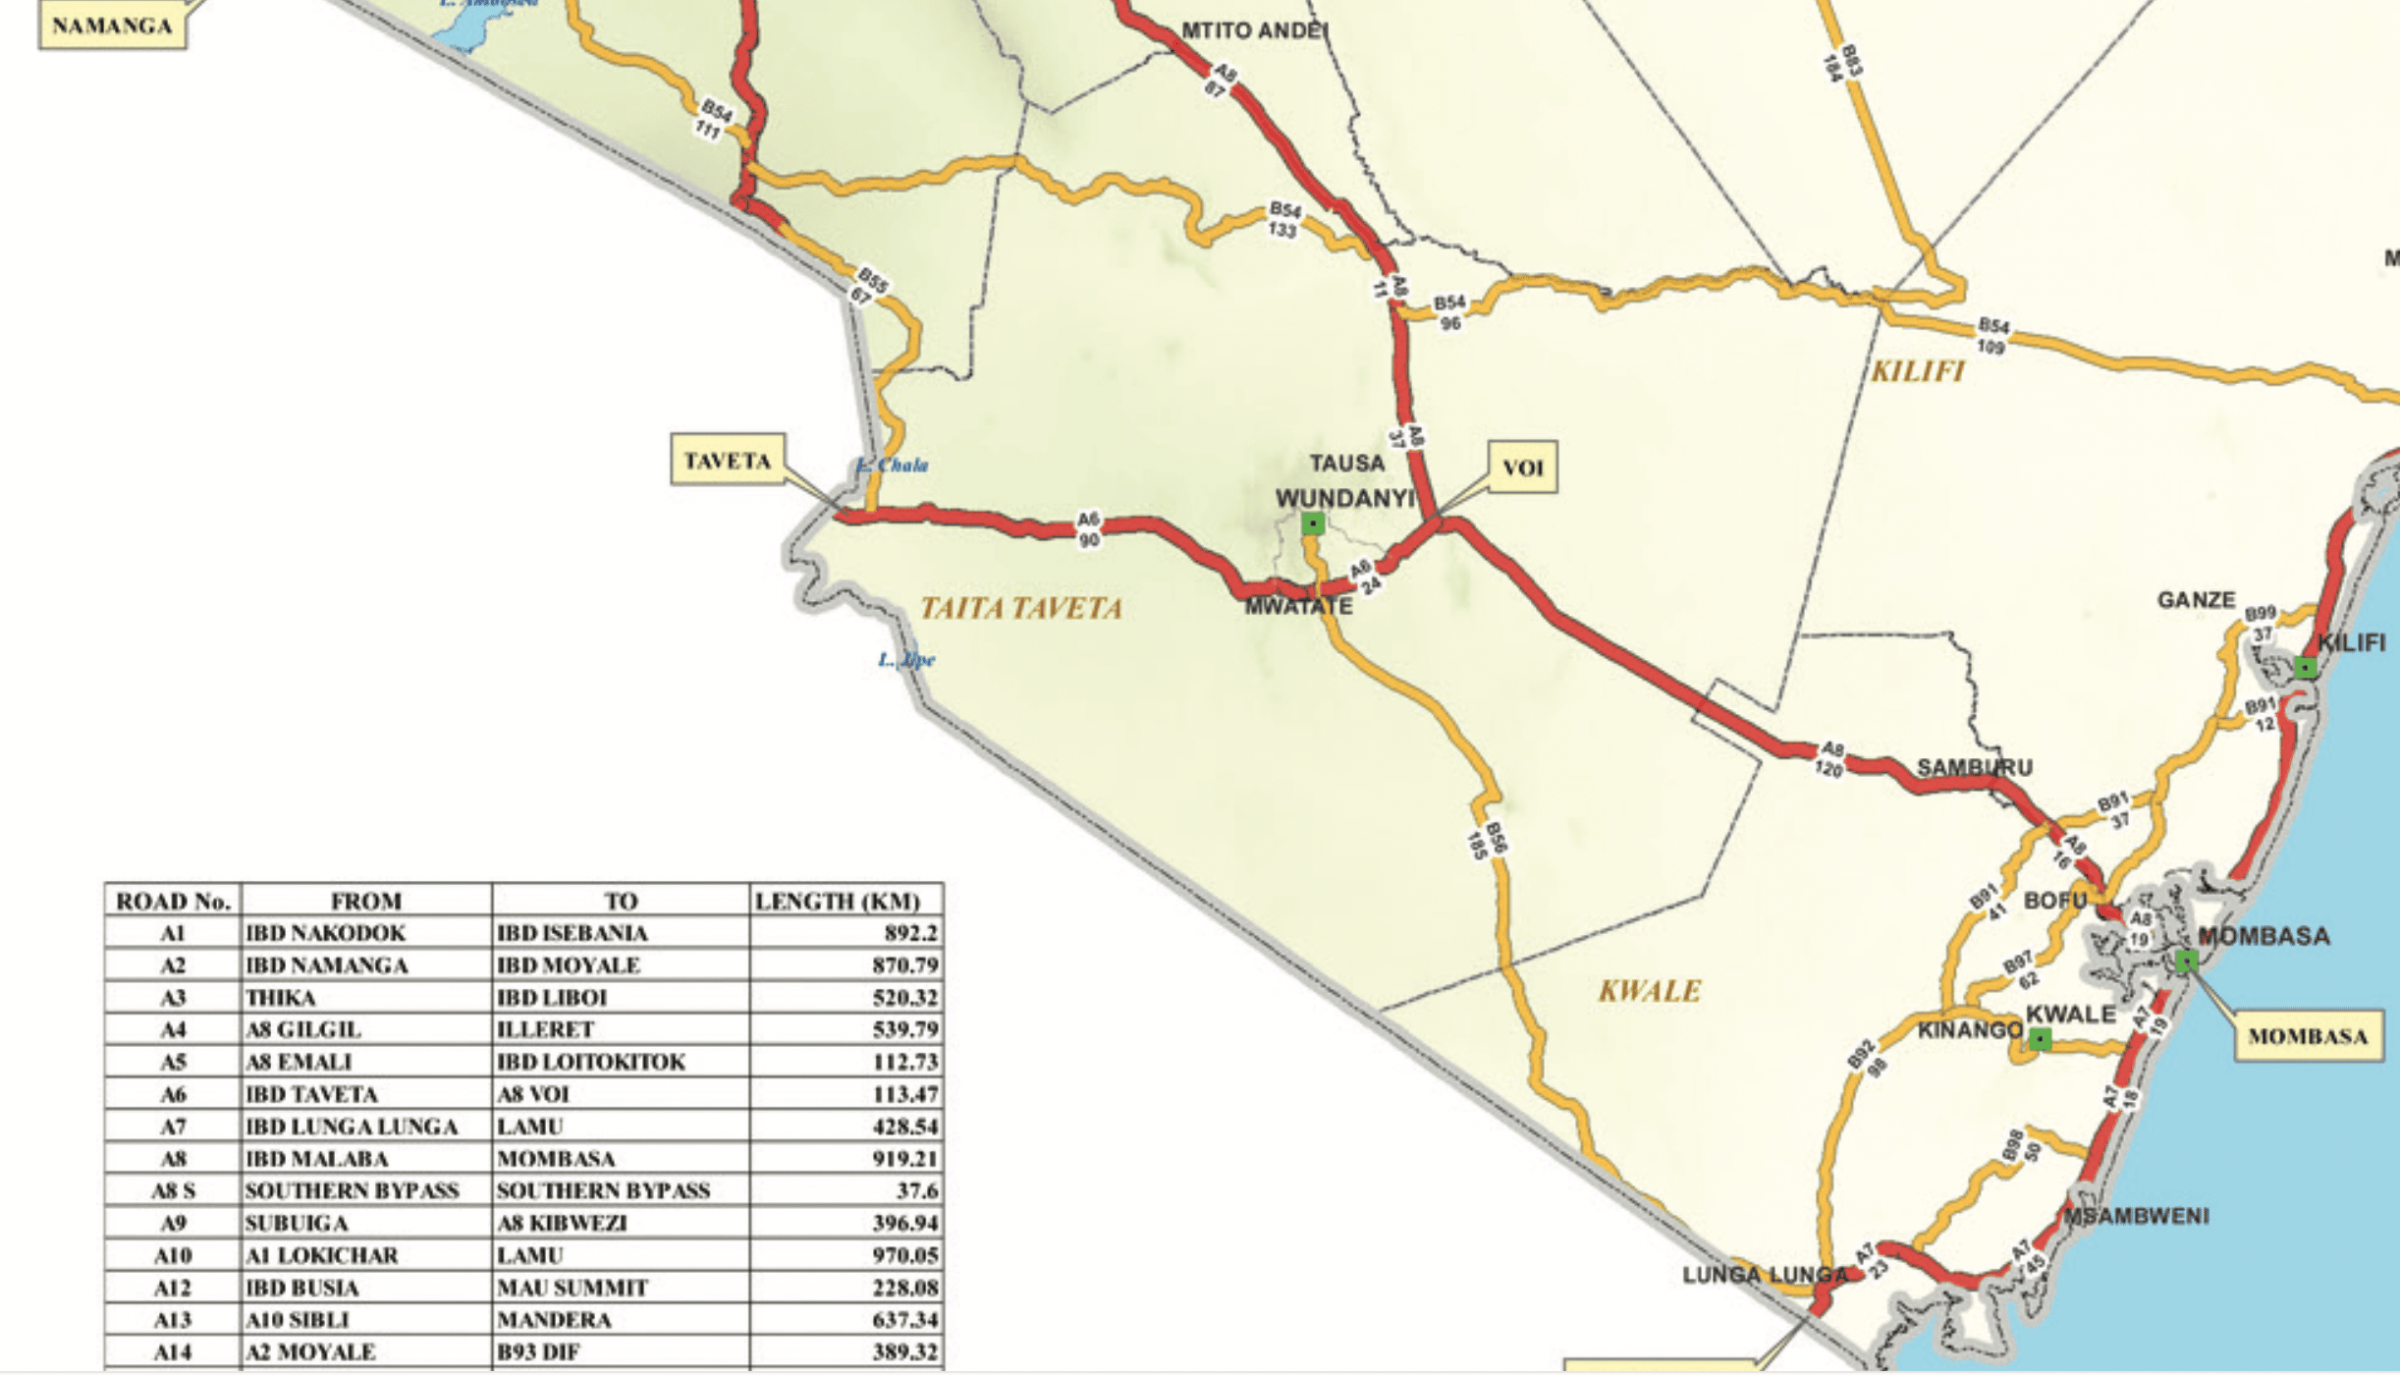 The road map of Kenha, the Kenyan ANWB